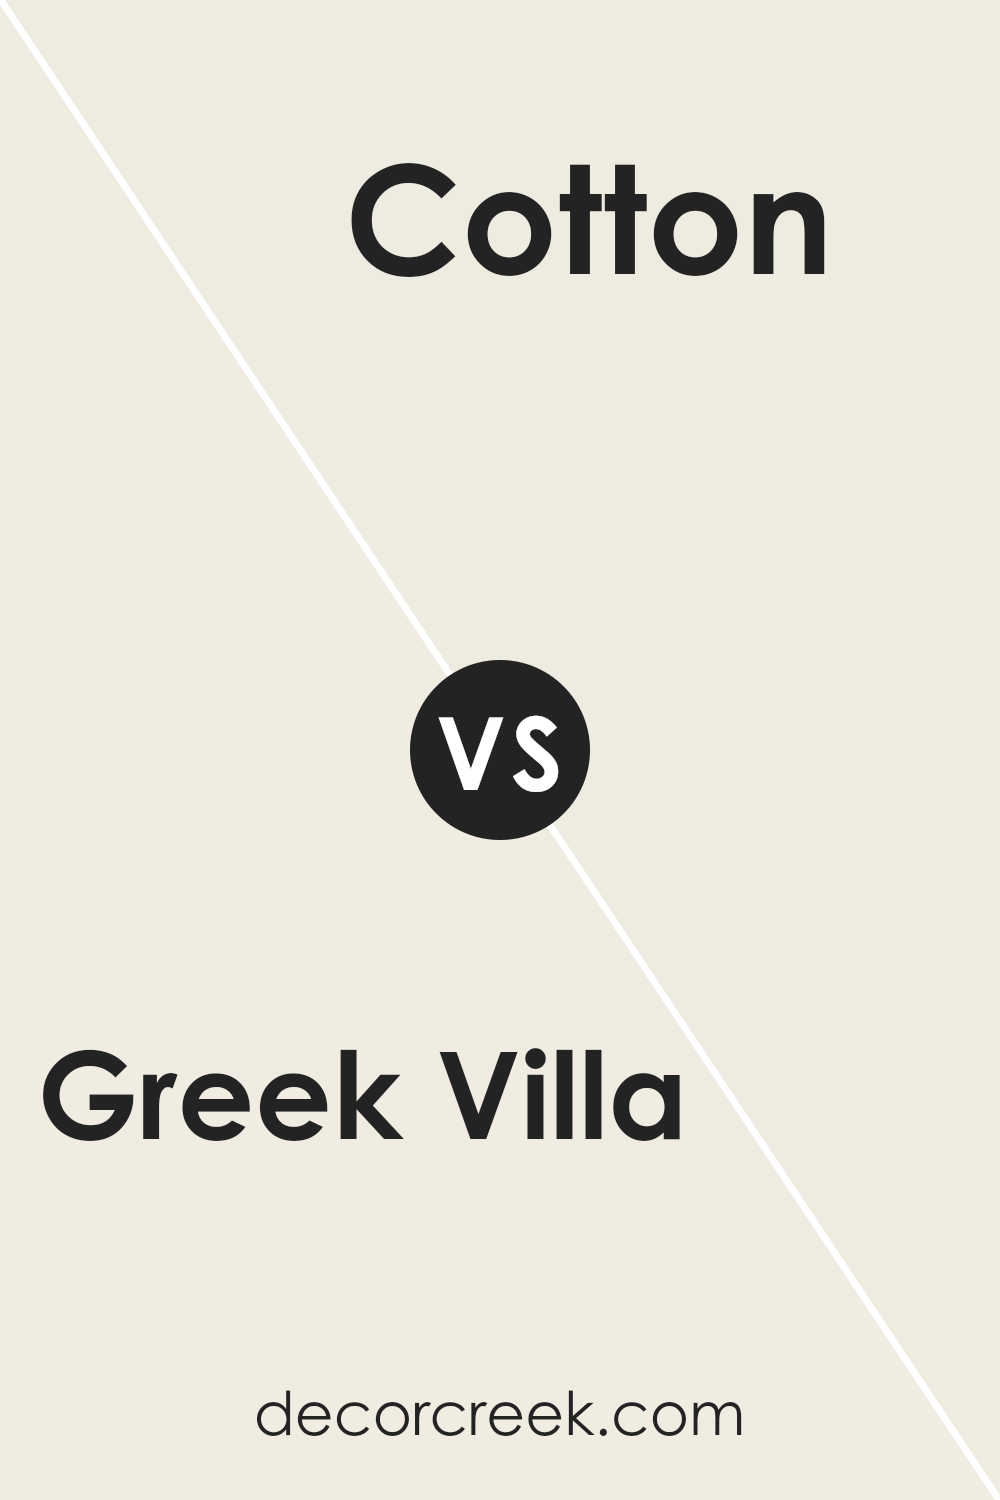 greek_villa_sw_7551_vs_cotton_sw_9581